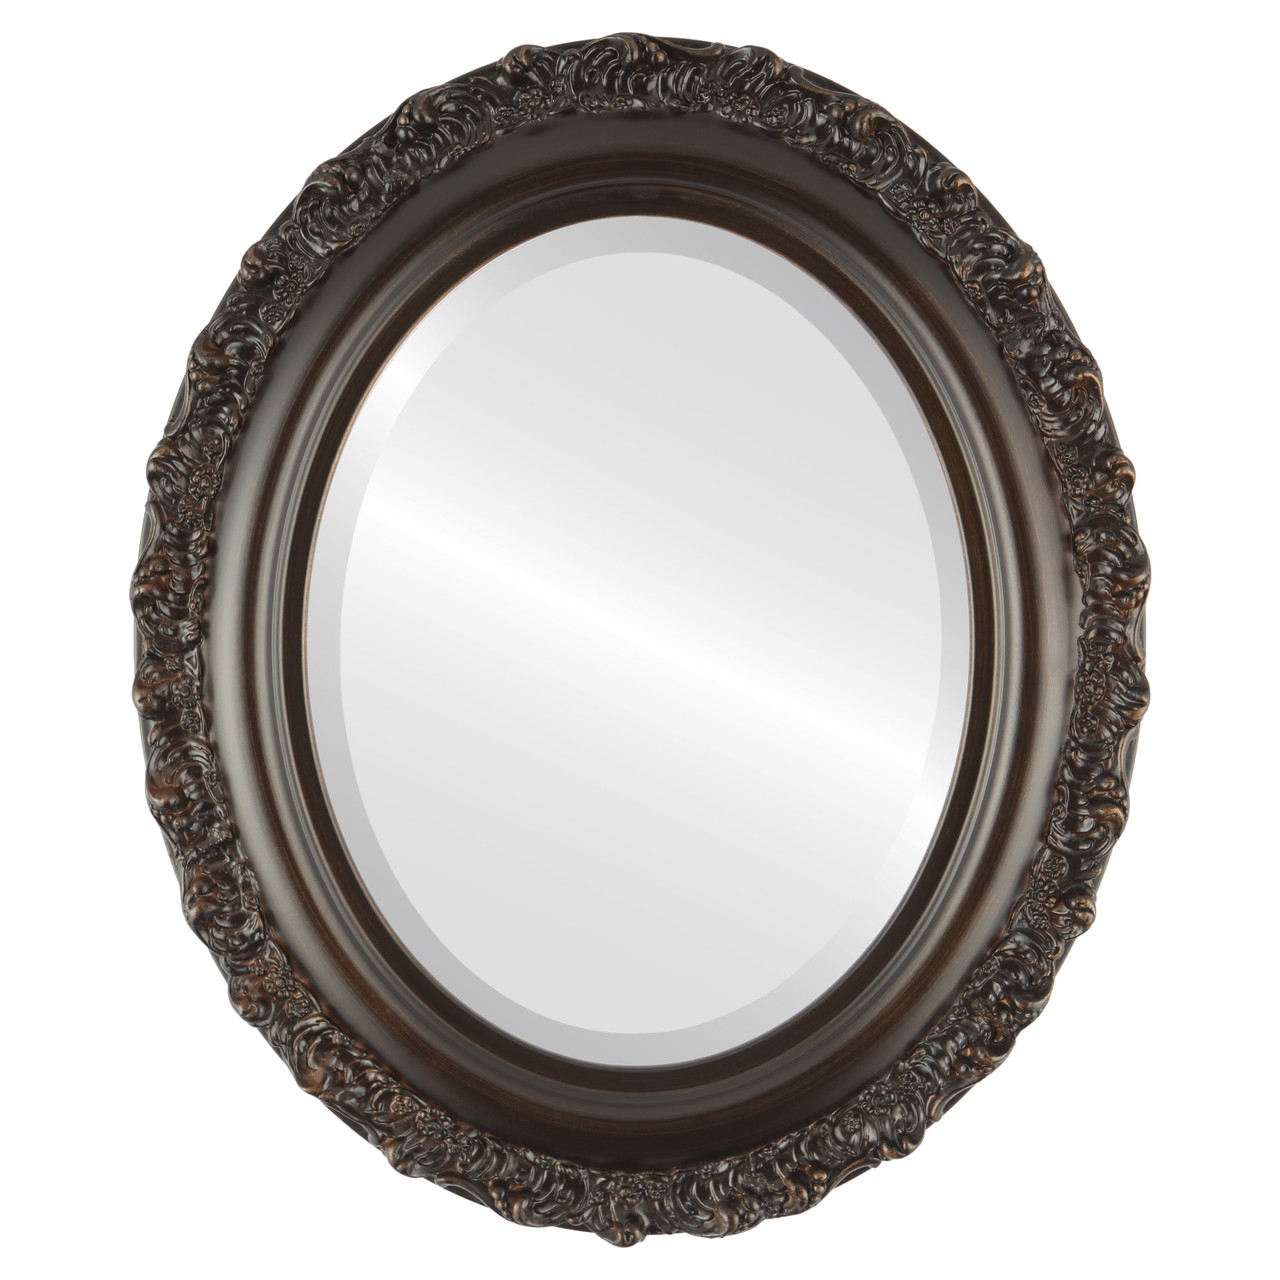 37 Circle Mosaic Mirror Round Mirror, Wall Mirror,bathroom Mirror